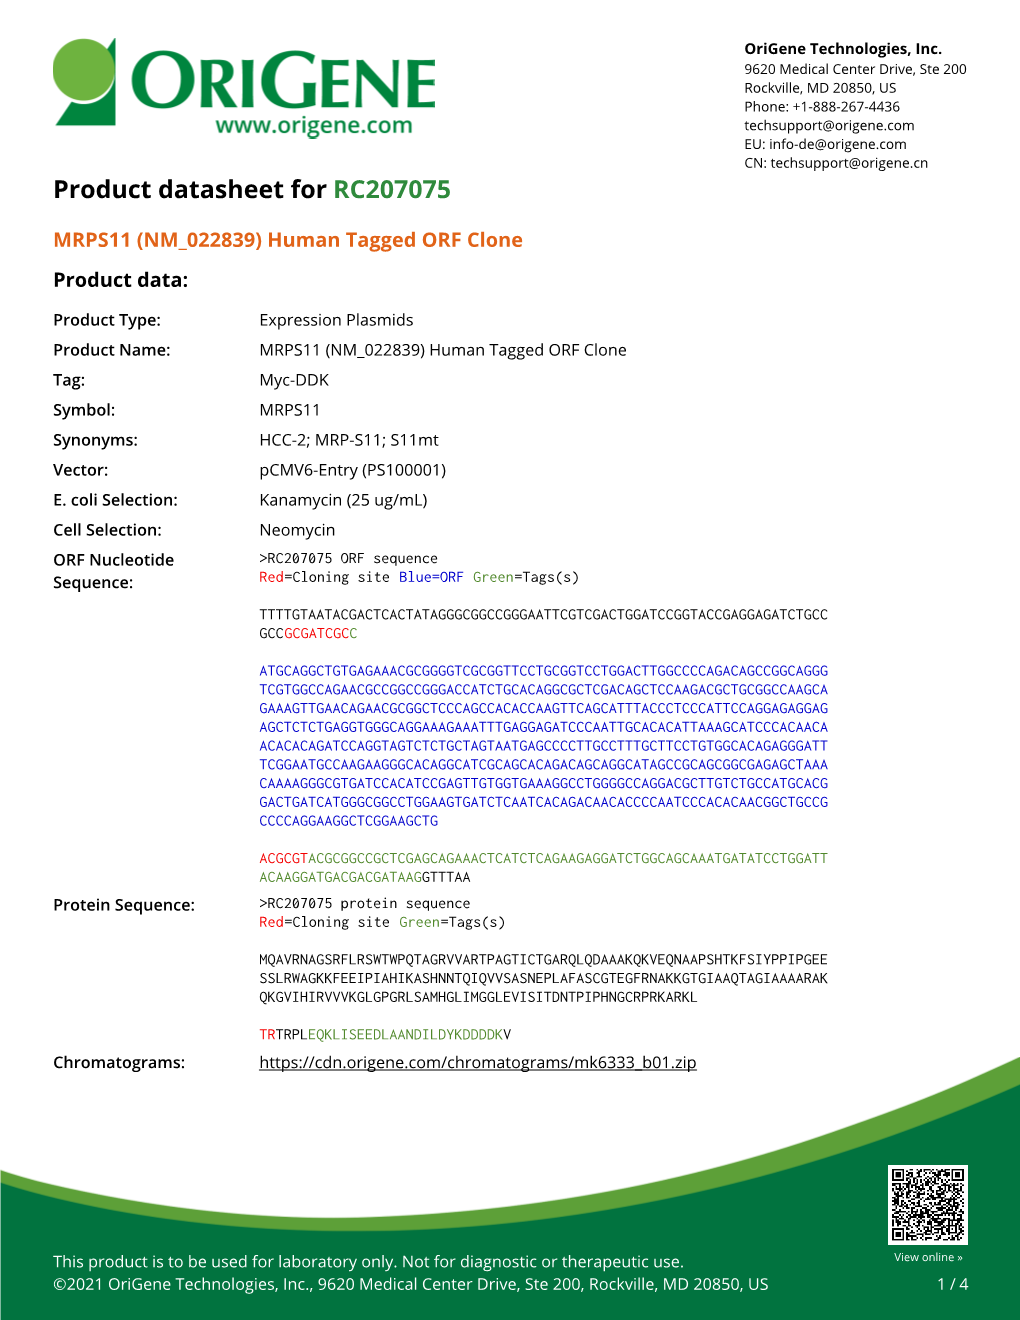 MRPS11 (NM 022839) Human Tagged ORF Clone – RC207075